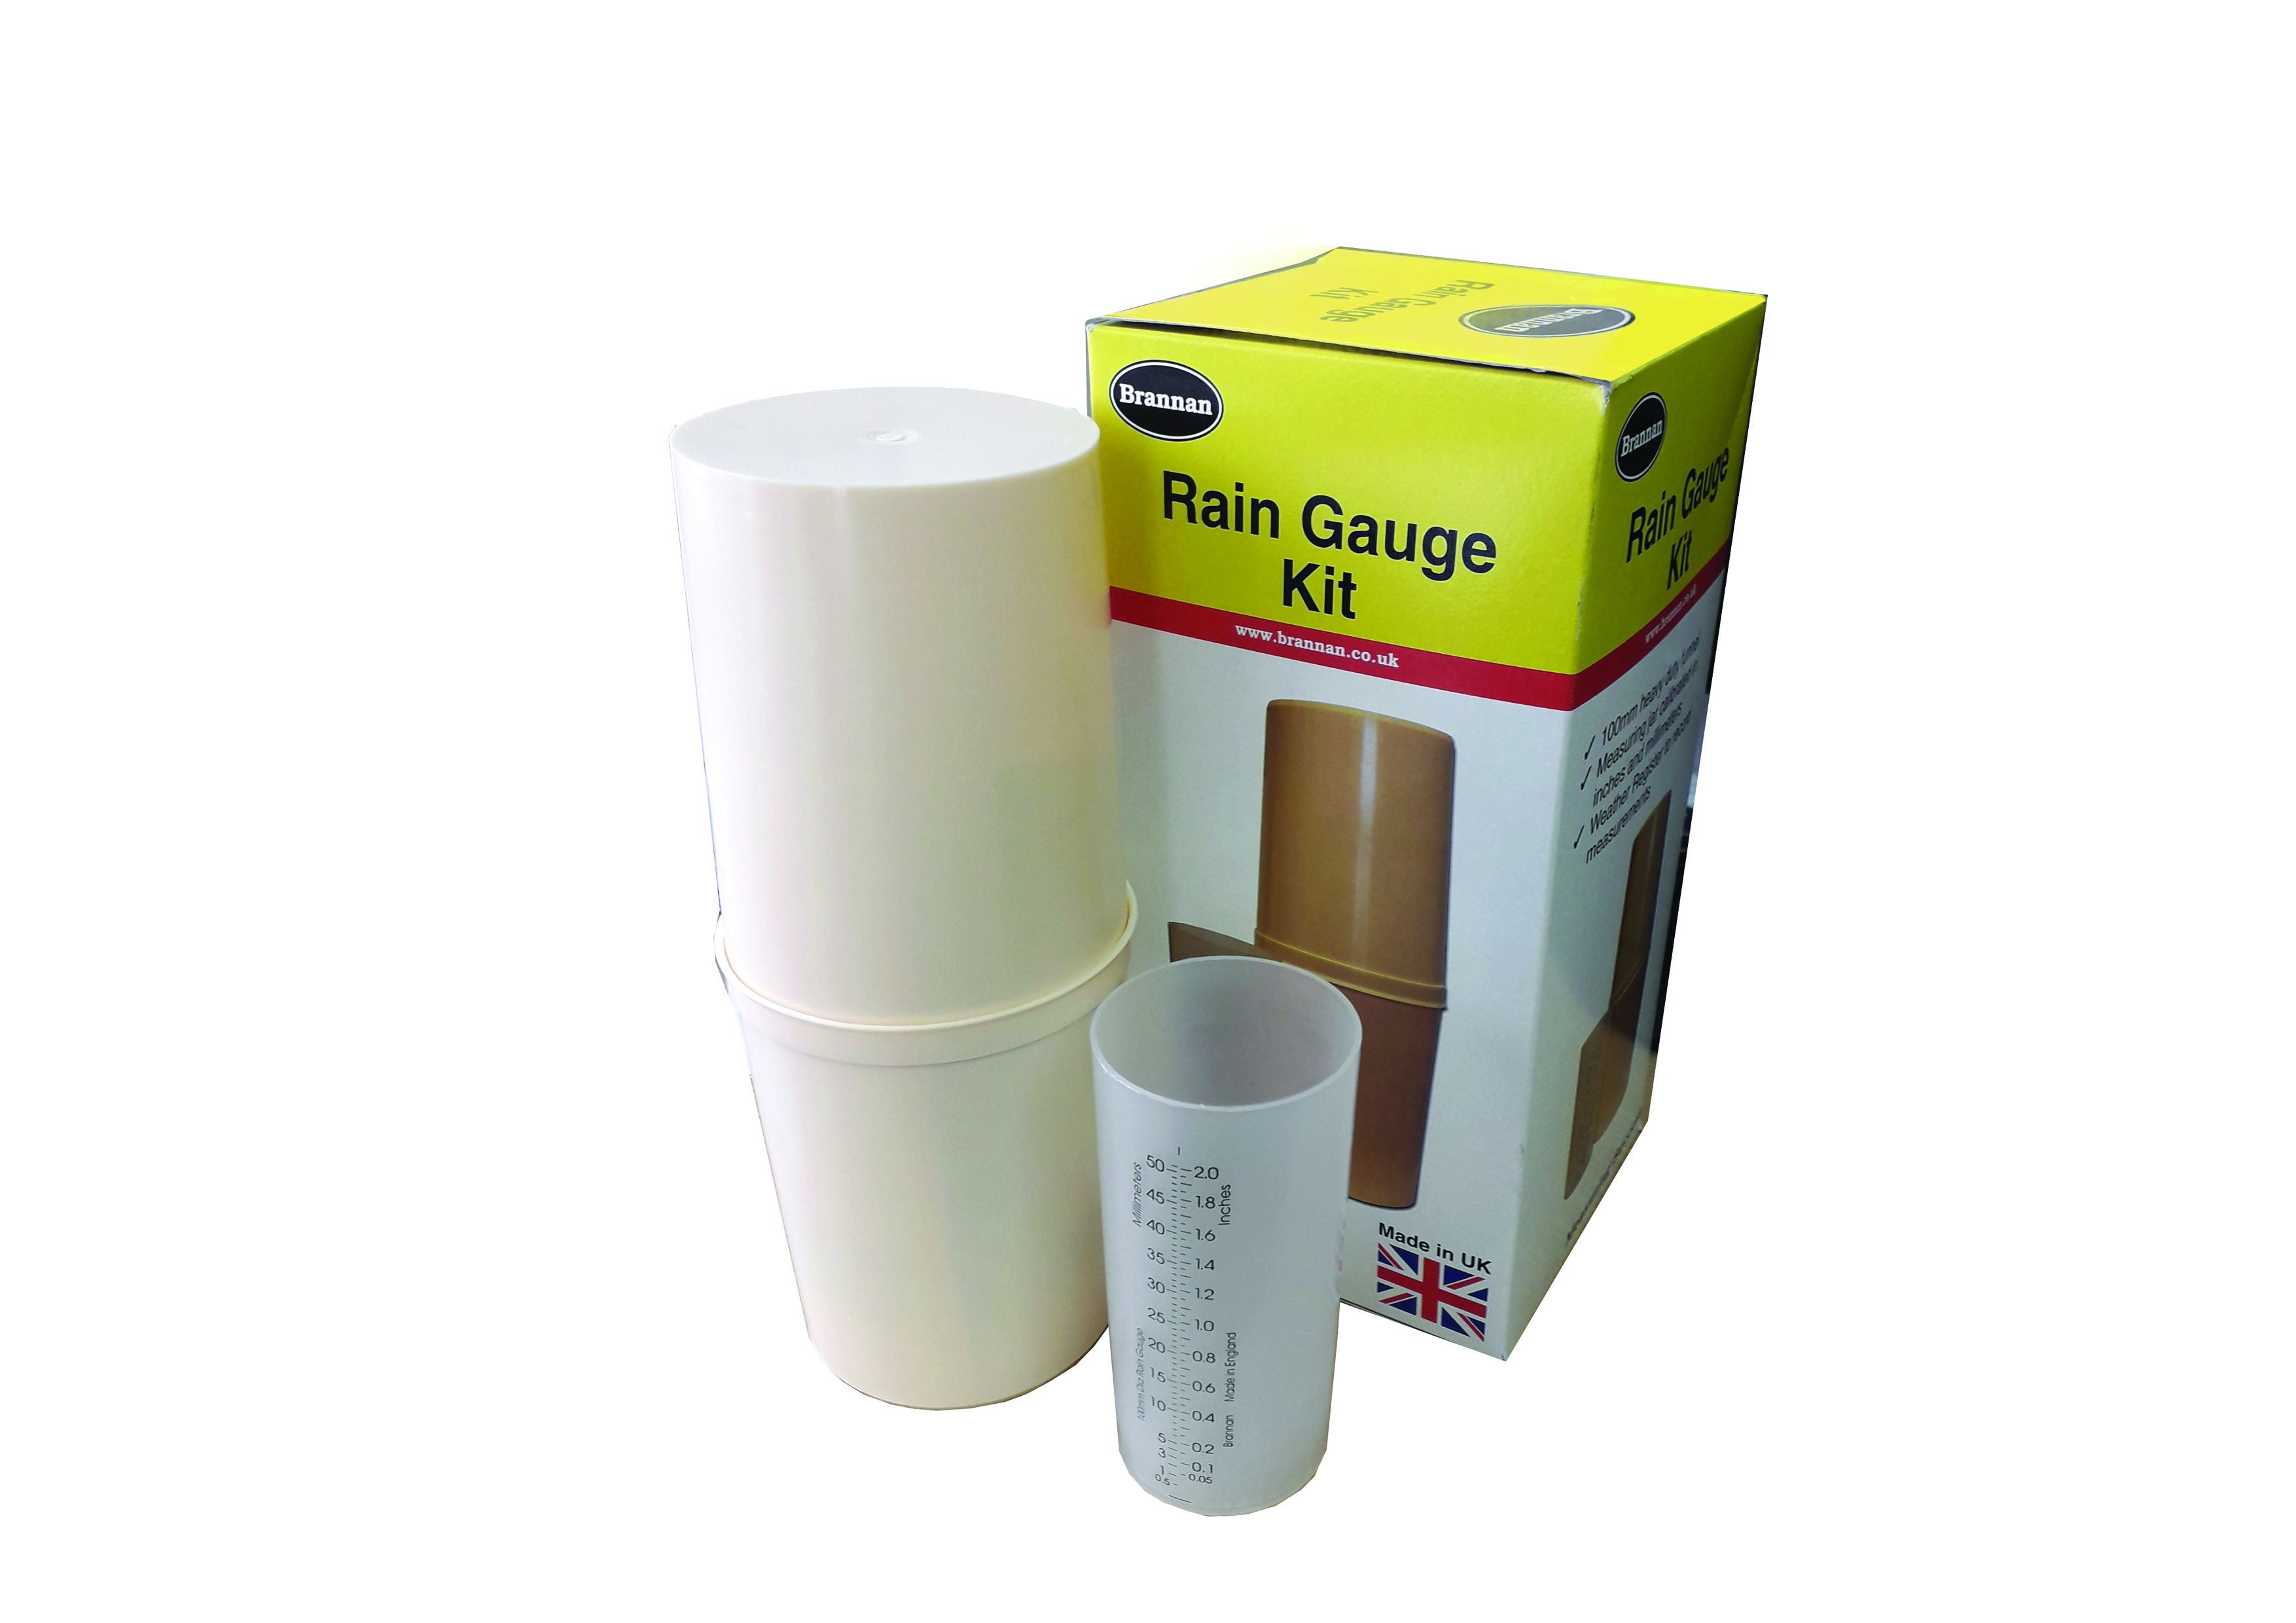 Rain Gauge, HD. Plastic